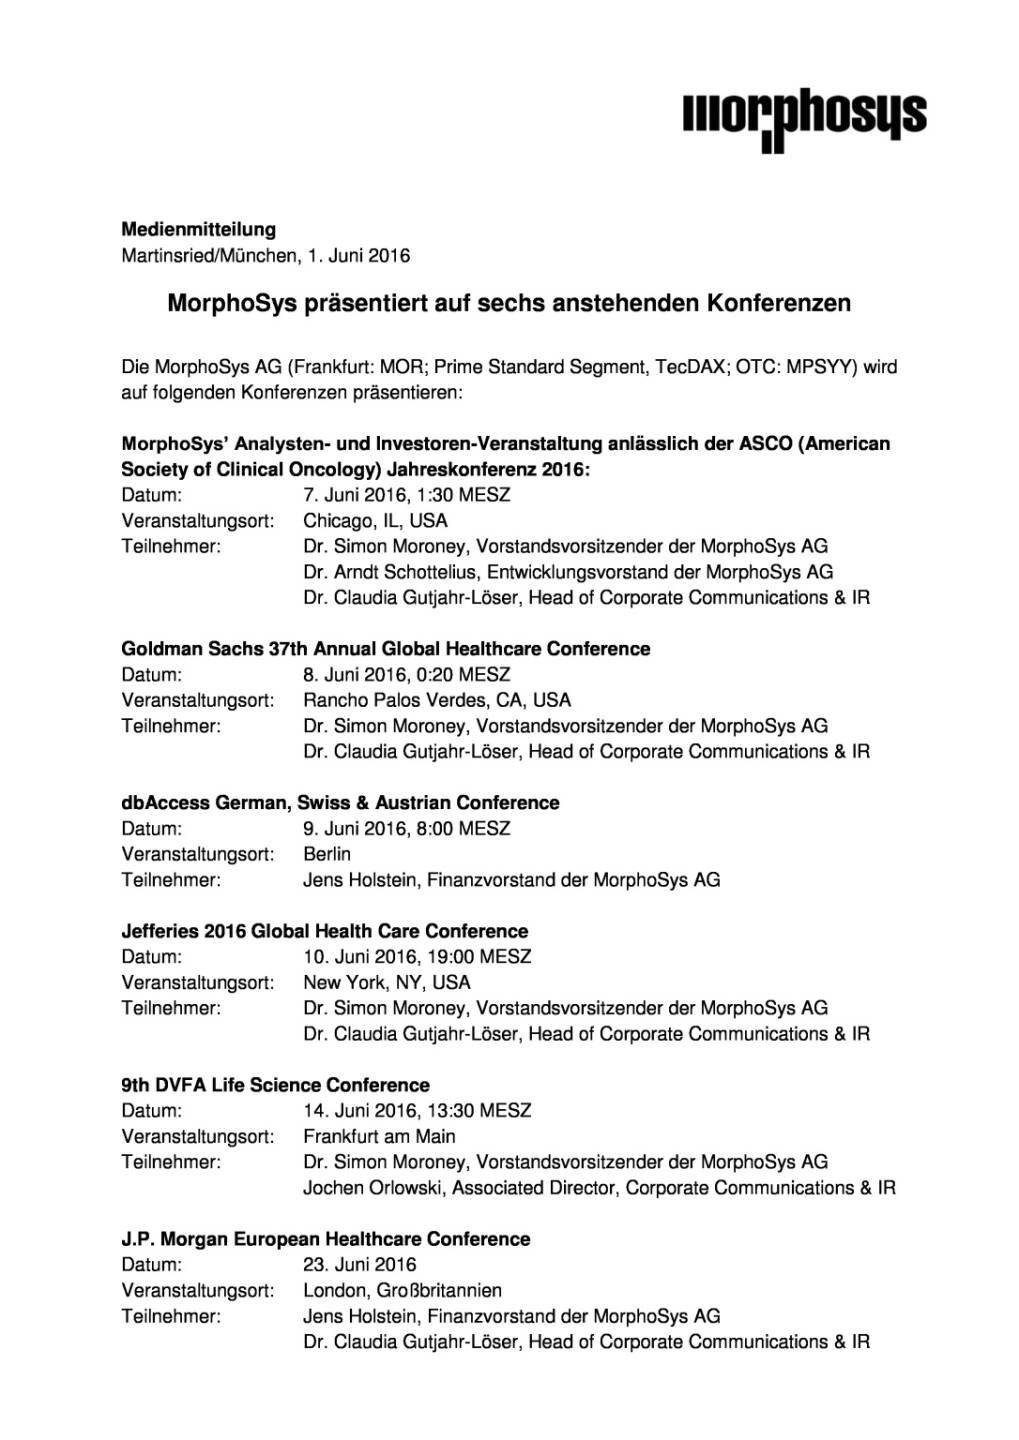 MorphoSys: Konferenzankündigungen, Seite 1/2, komplettes Dokument unter http://boerse-social.com/static/uploads/file_1153_morphosys_konferenzankundigungen.pdf